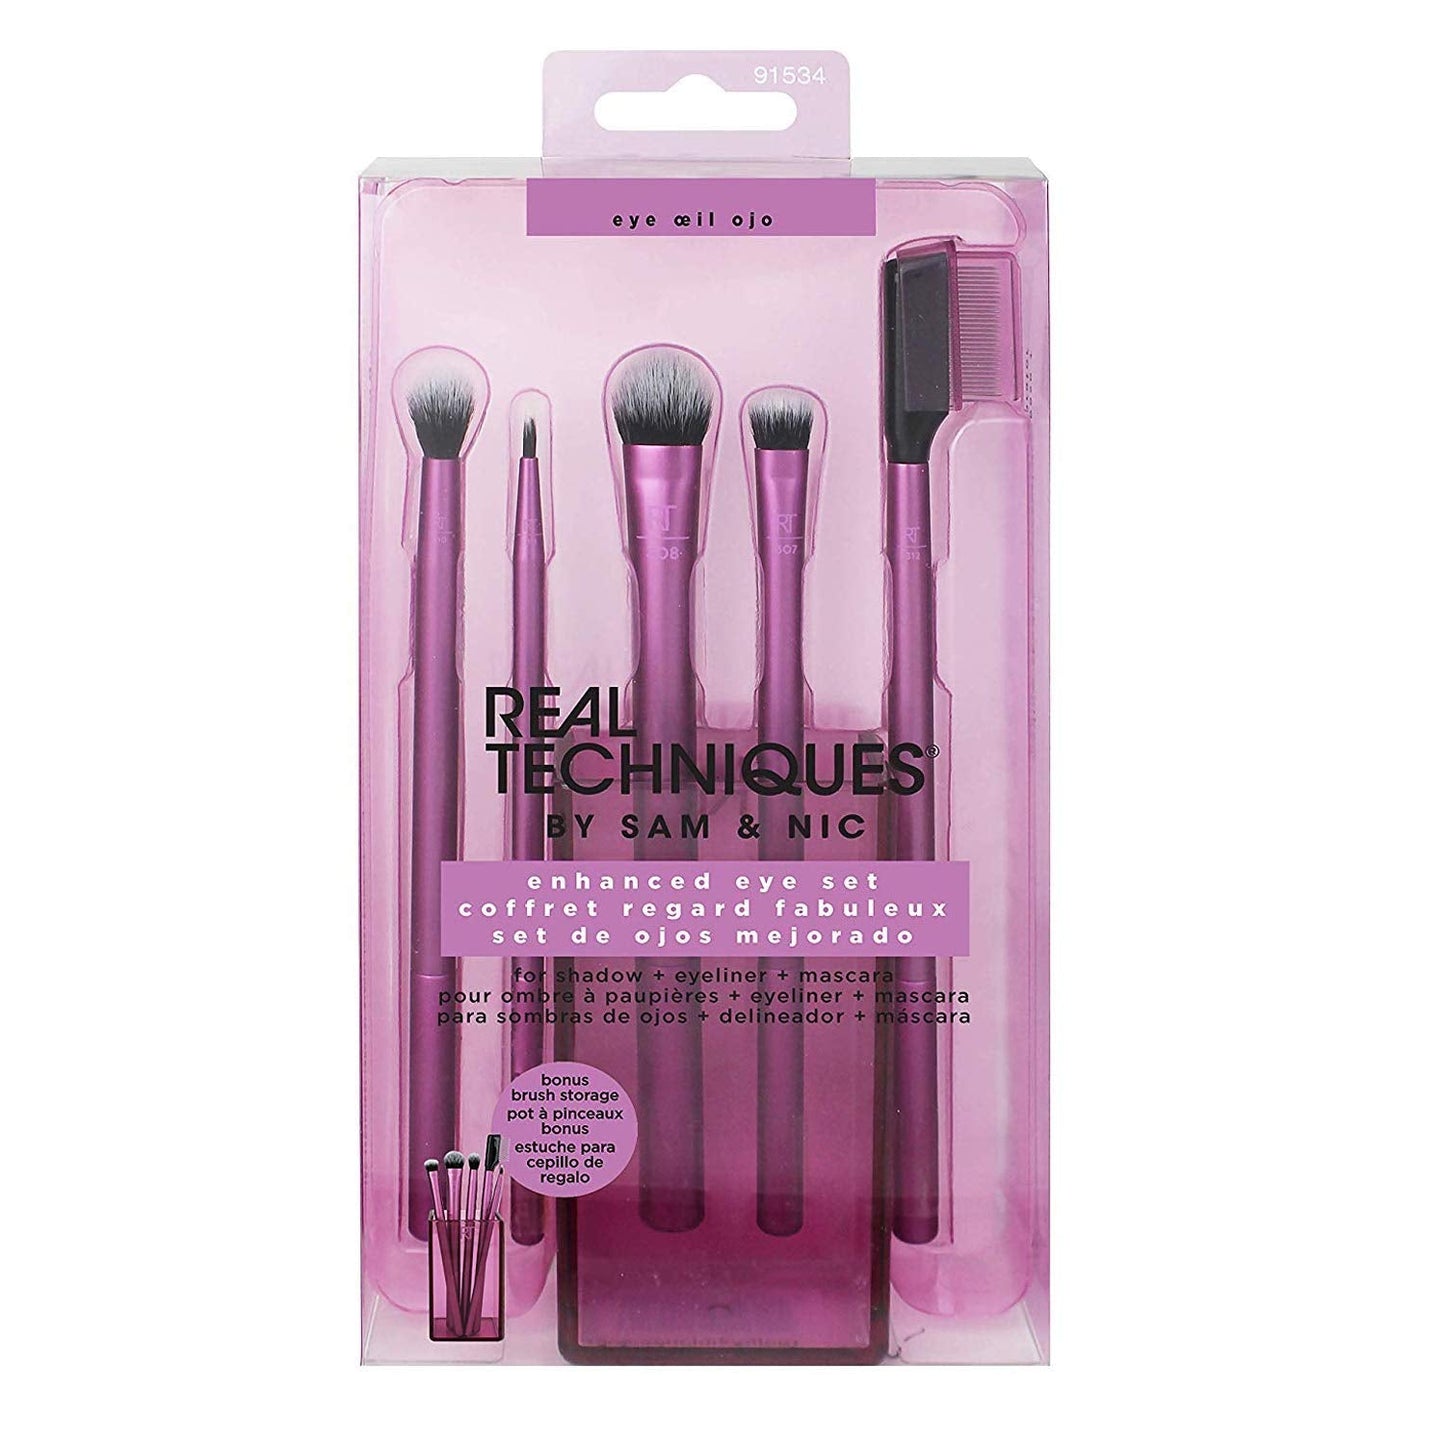 Real Techniques 1534 Enhanced Eye Set Eyeshadow & Eyeliner Makeup Brush Kit for Every Look